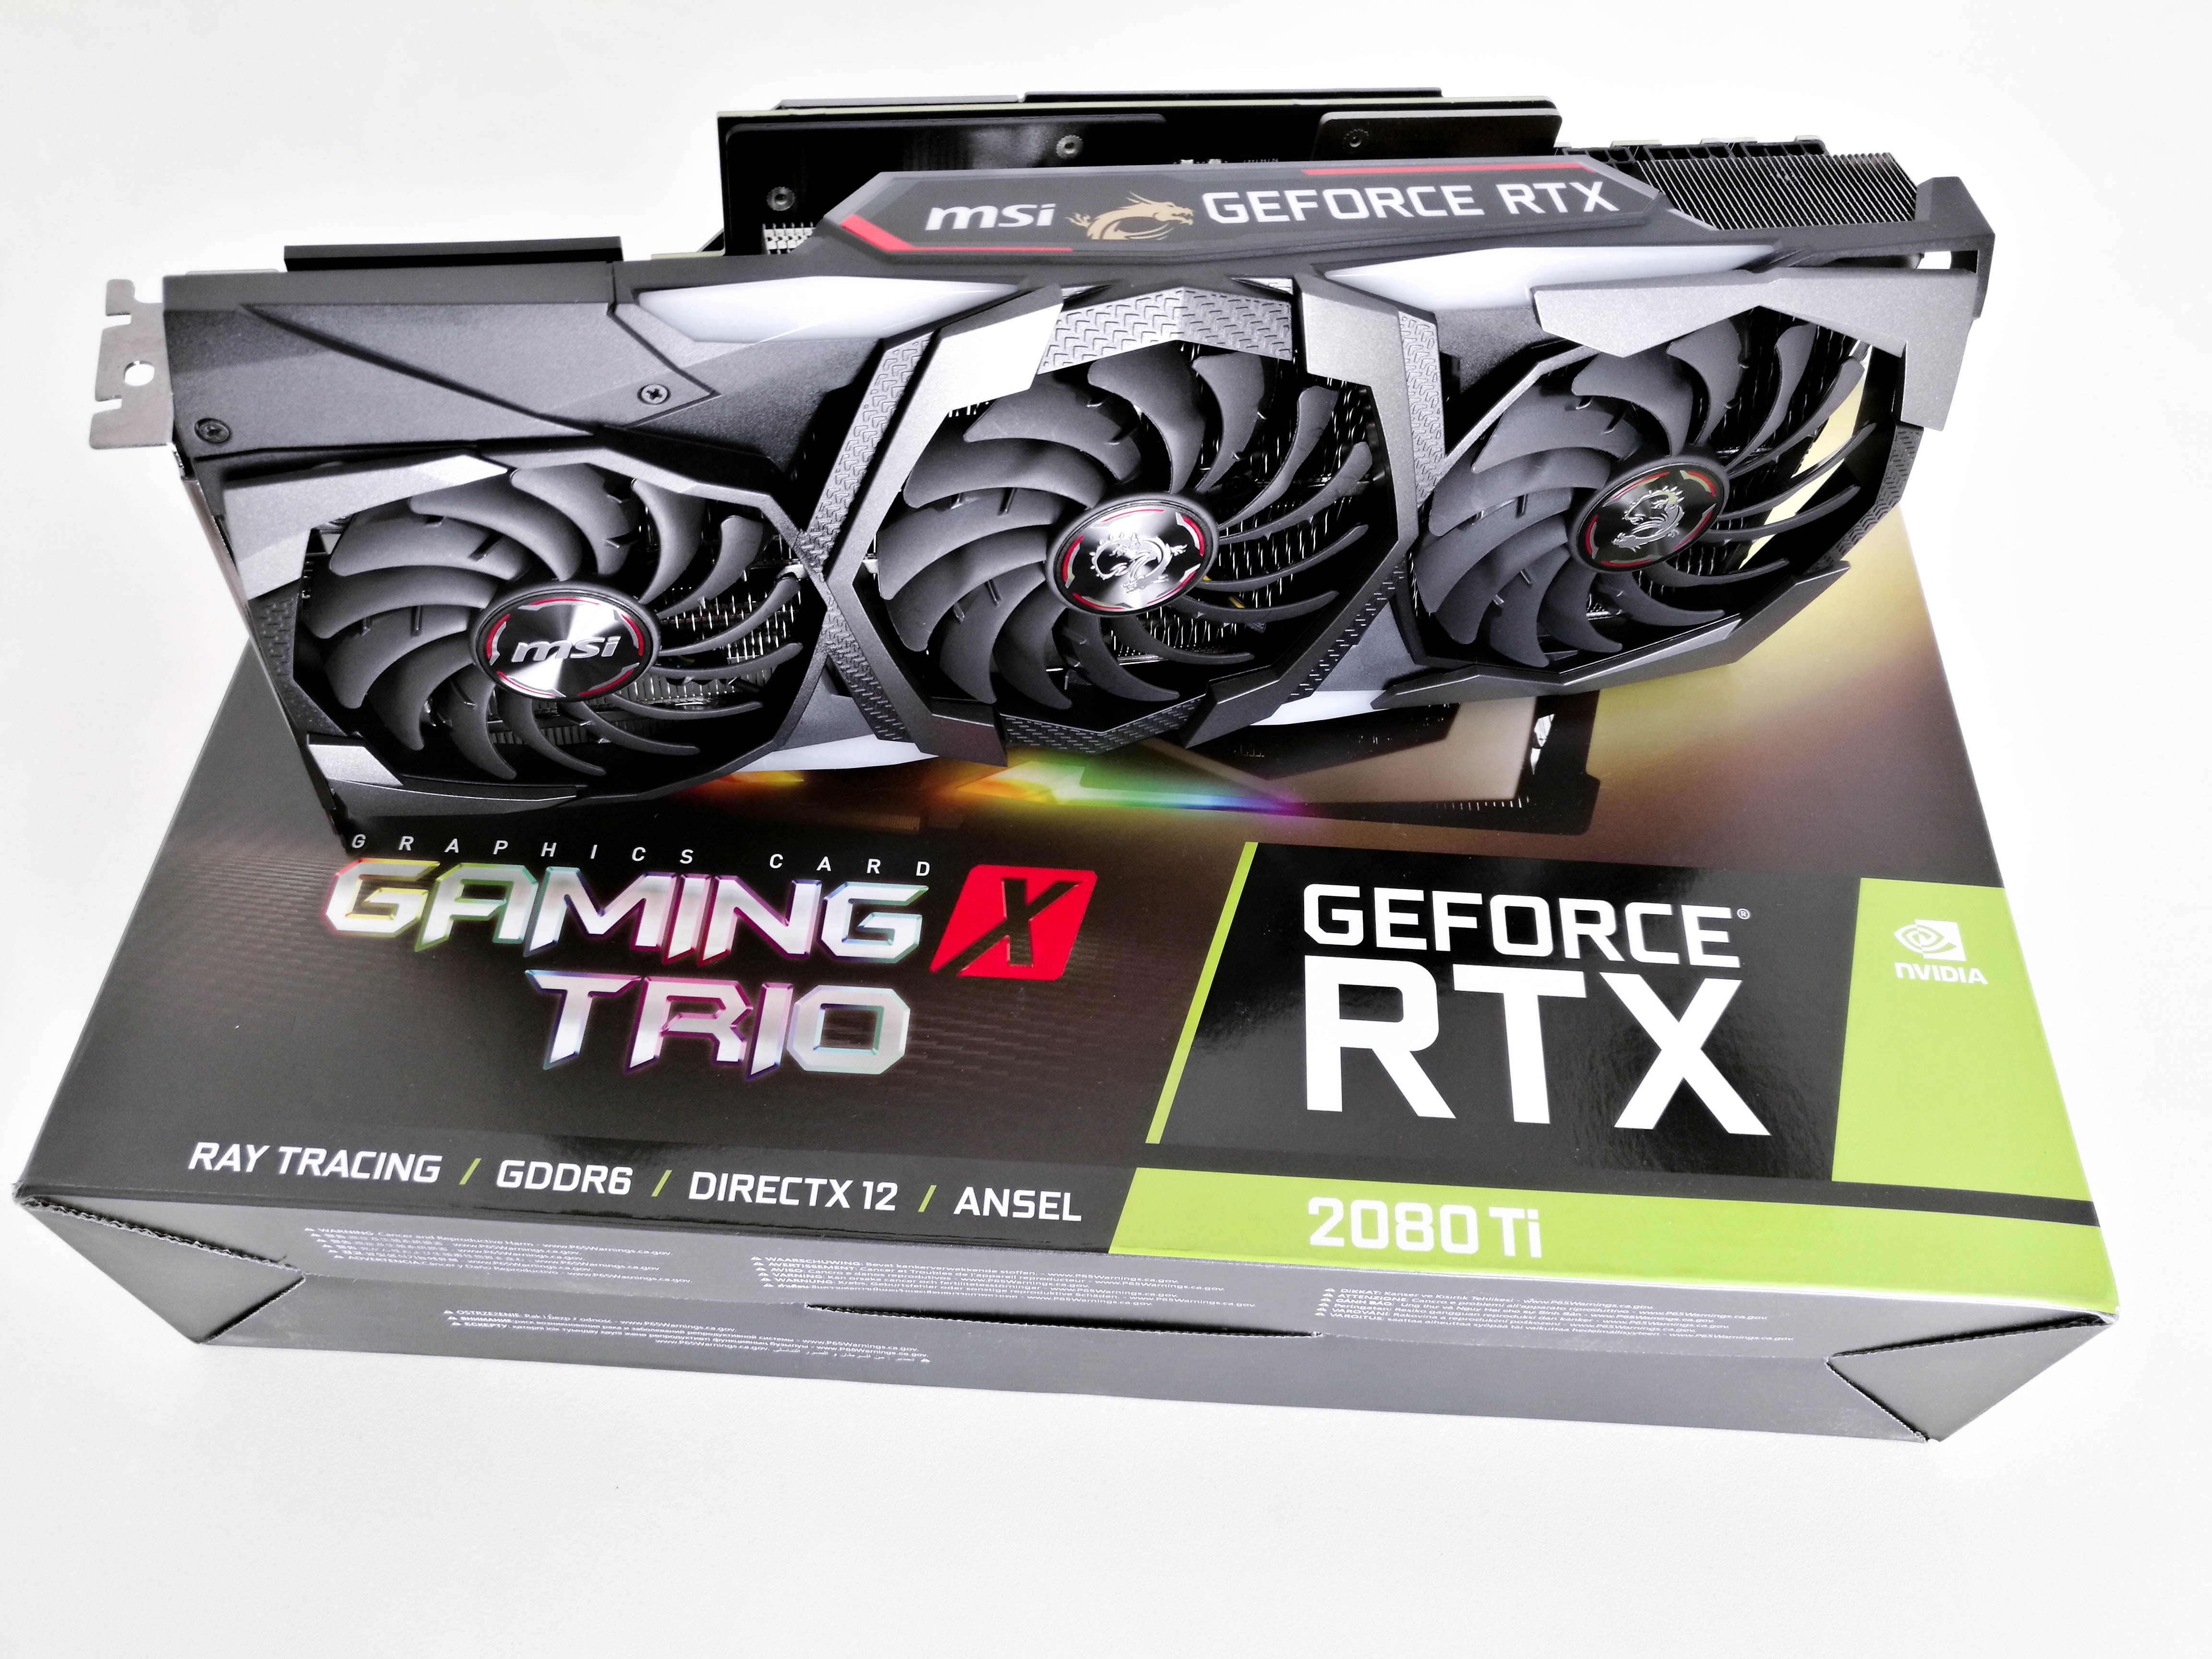 Image 2 : Photos : la GeForce RTX 2080 Ti Gaming X Trio de MSI en détail